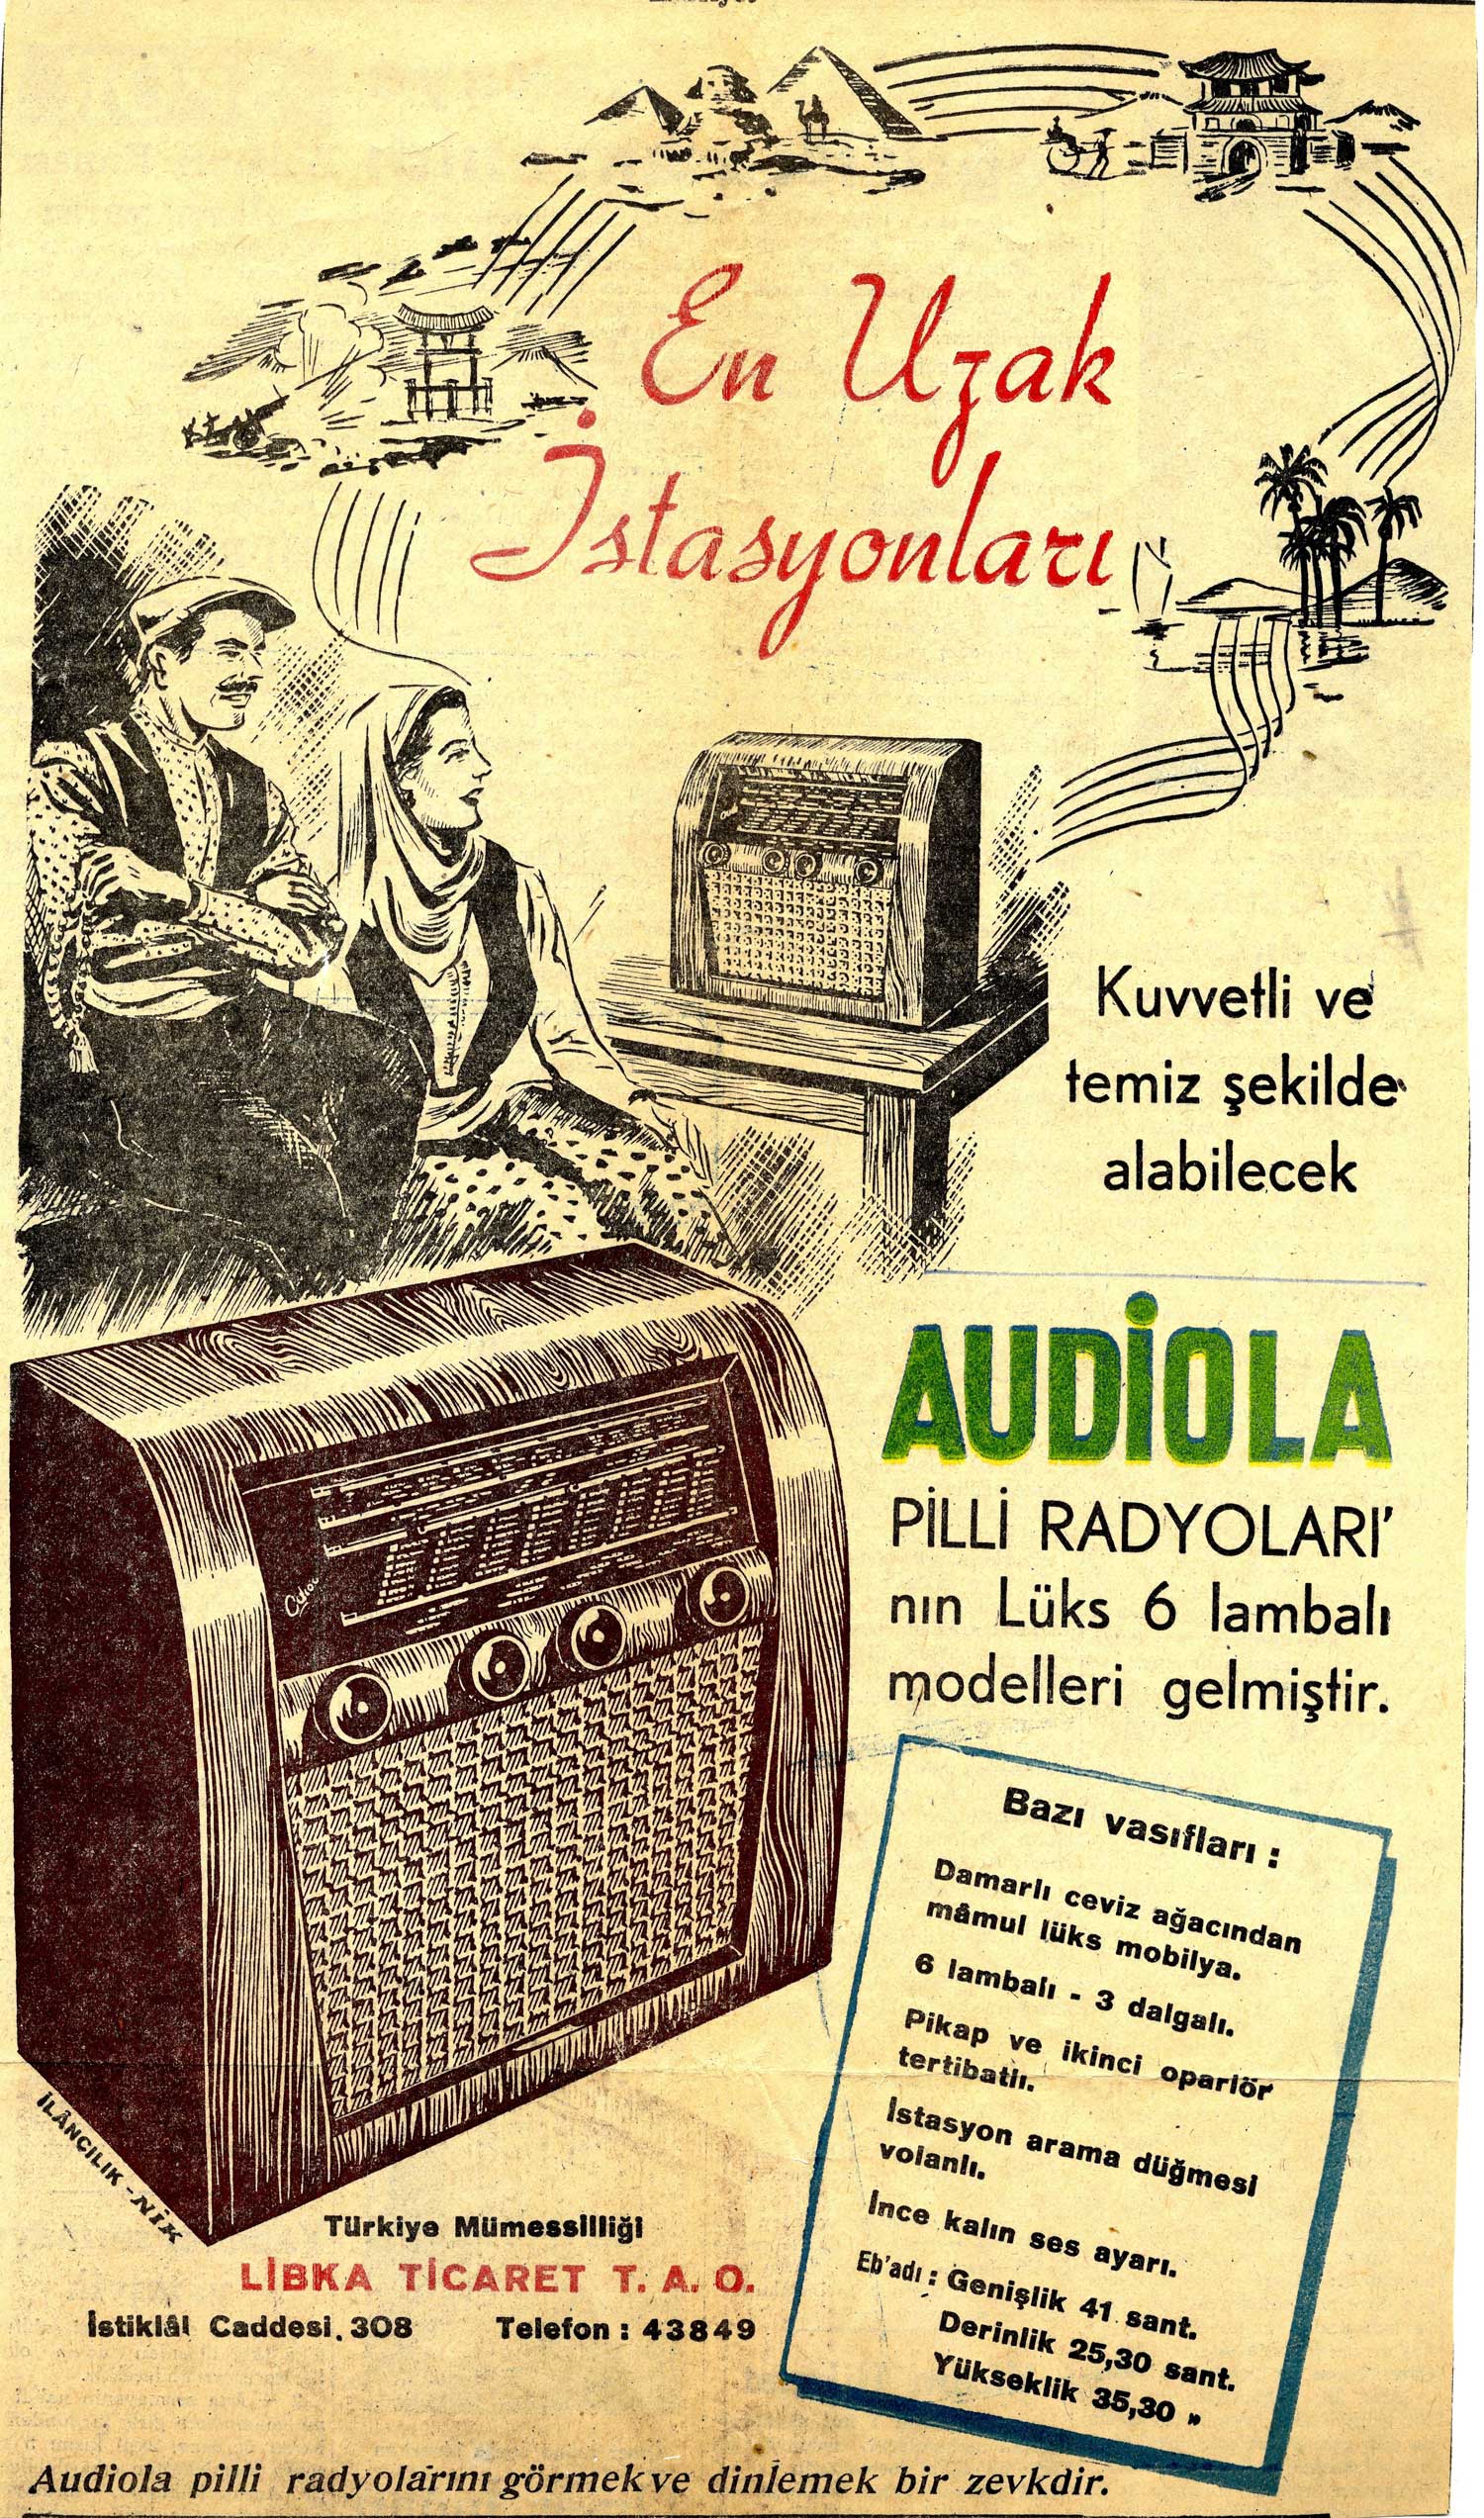 Turkish audiola ad